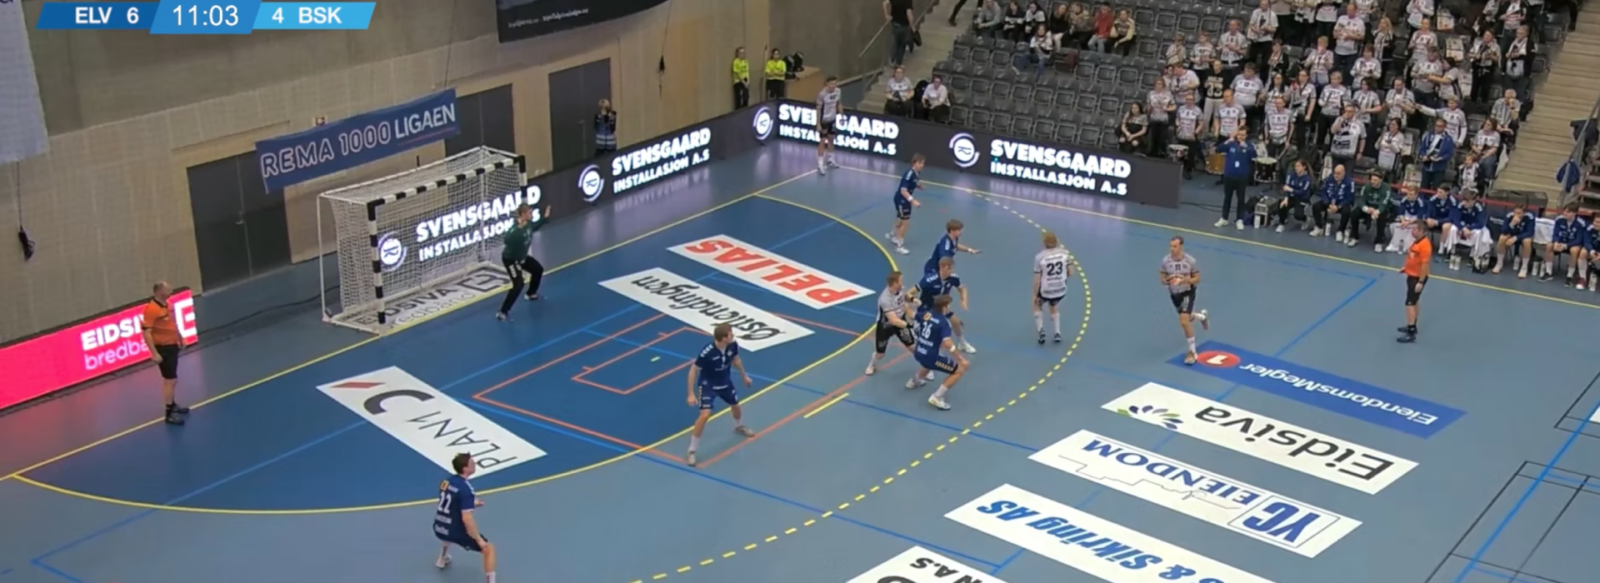 handball liveübertragung